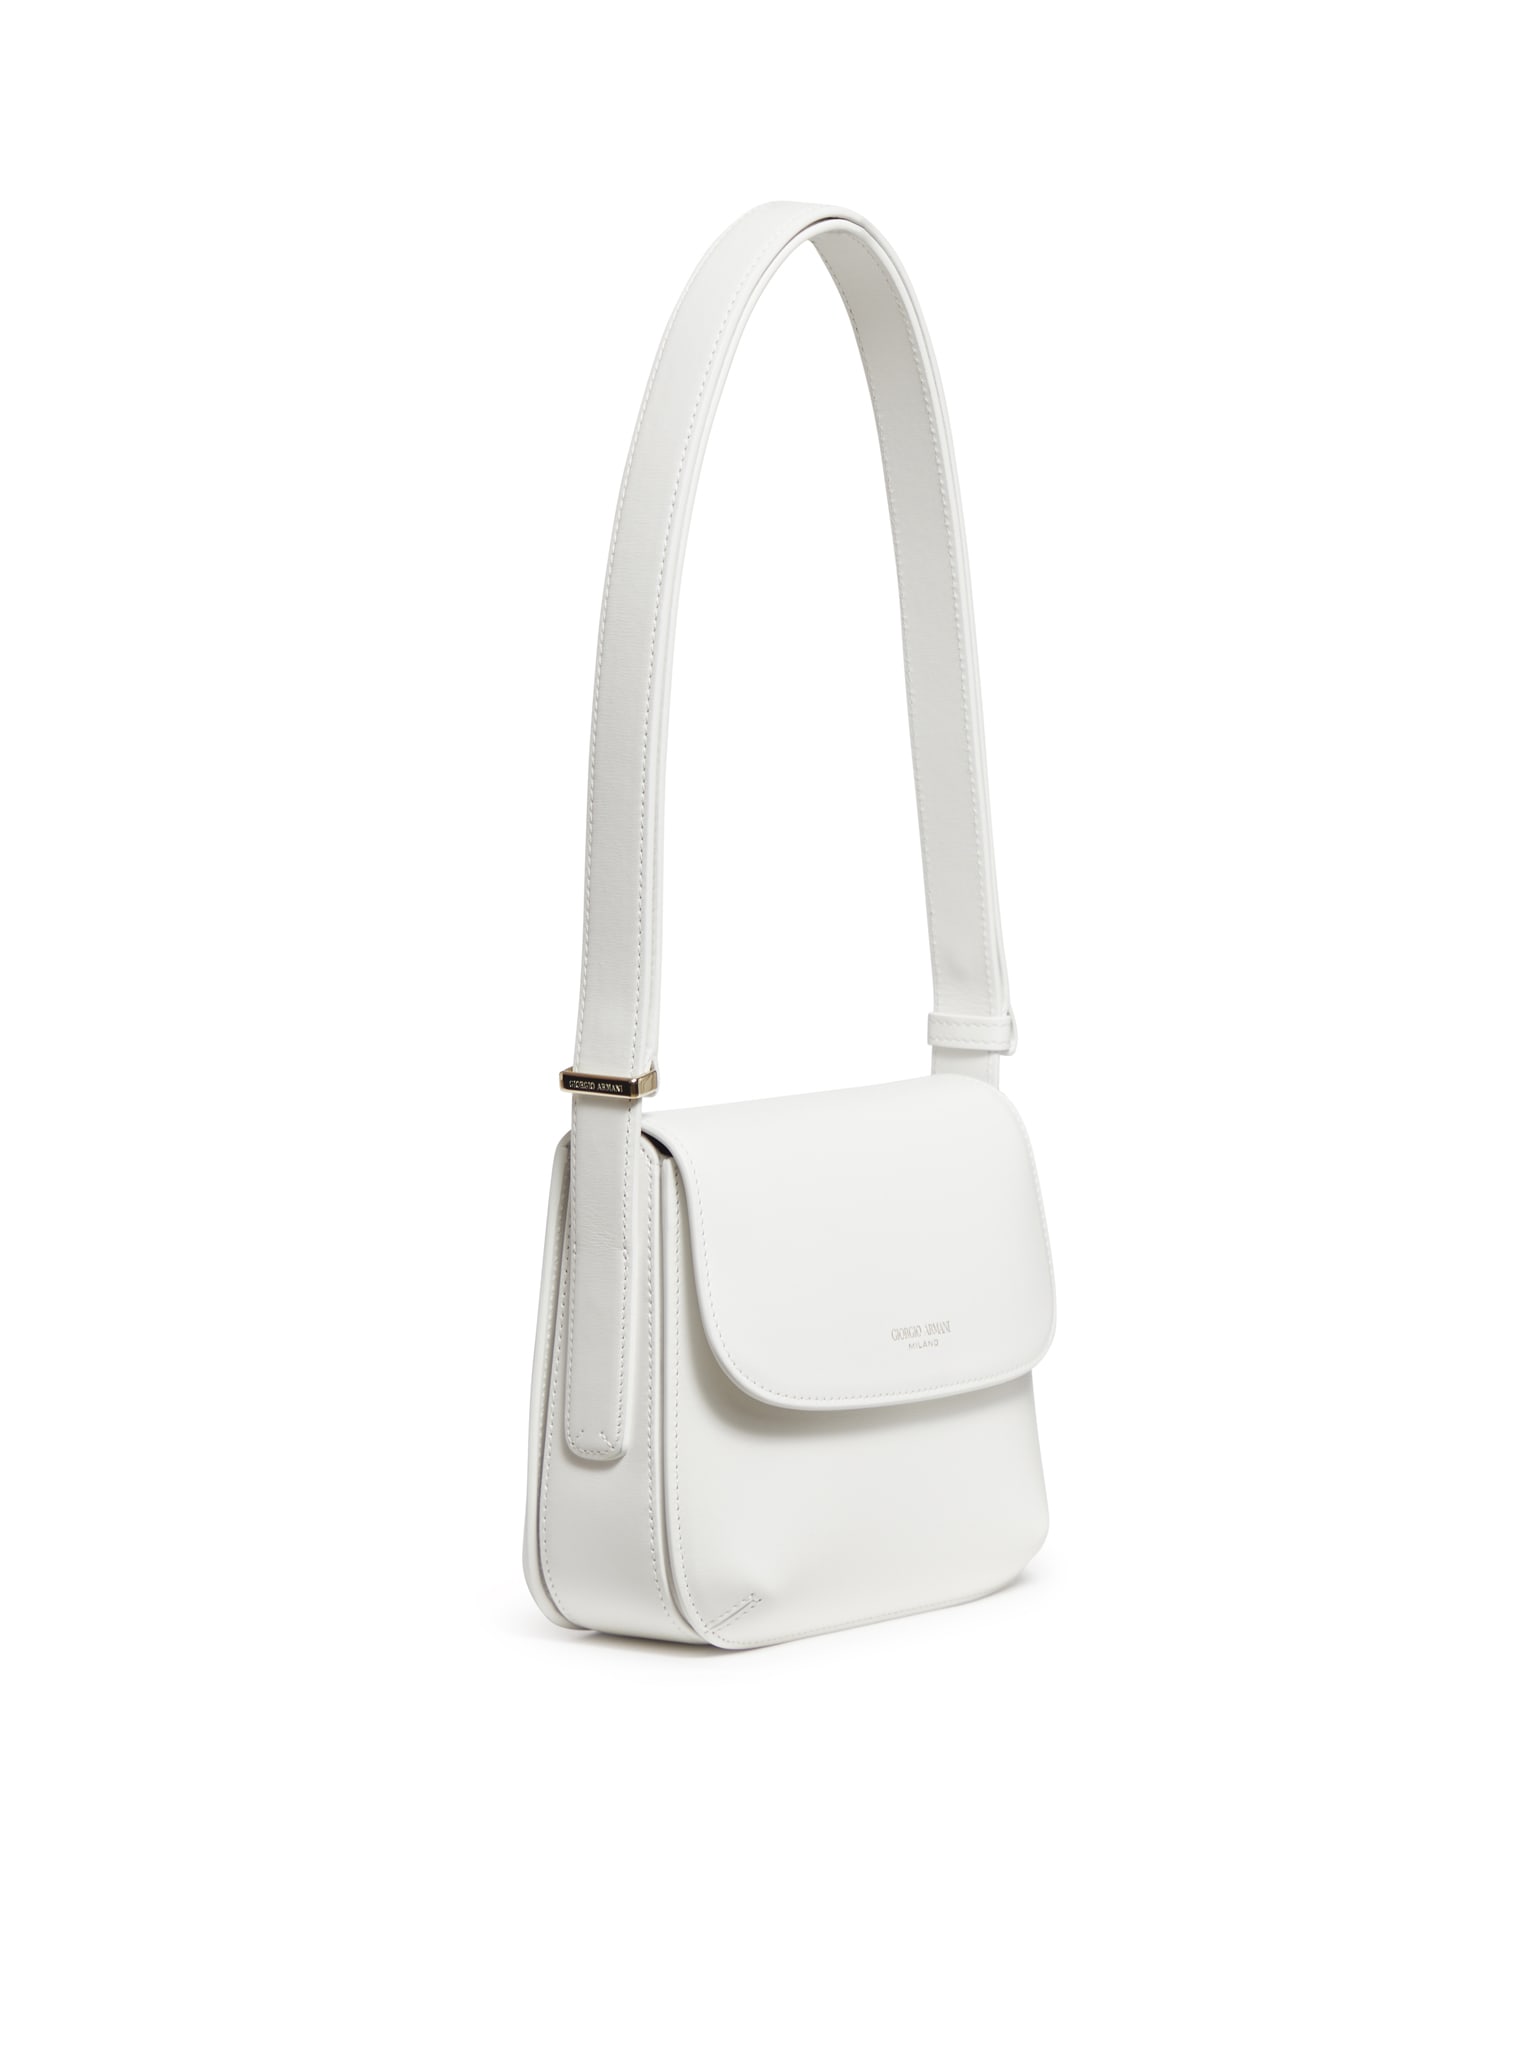 Giorgio Armani La Prima Mini Embellished Satin Shoulder Bag, Black, Women's, Handbags & Purses Shoulder Bags